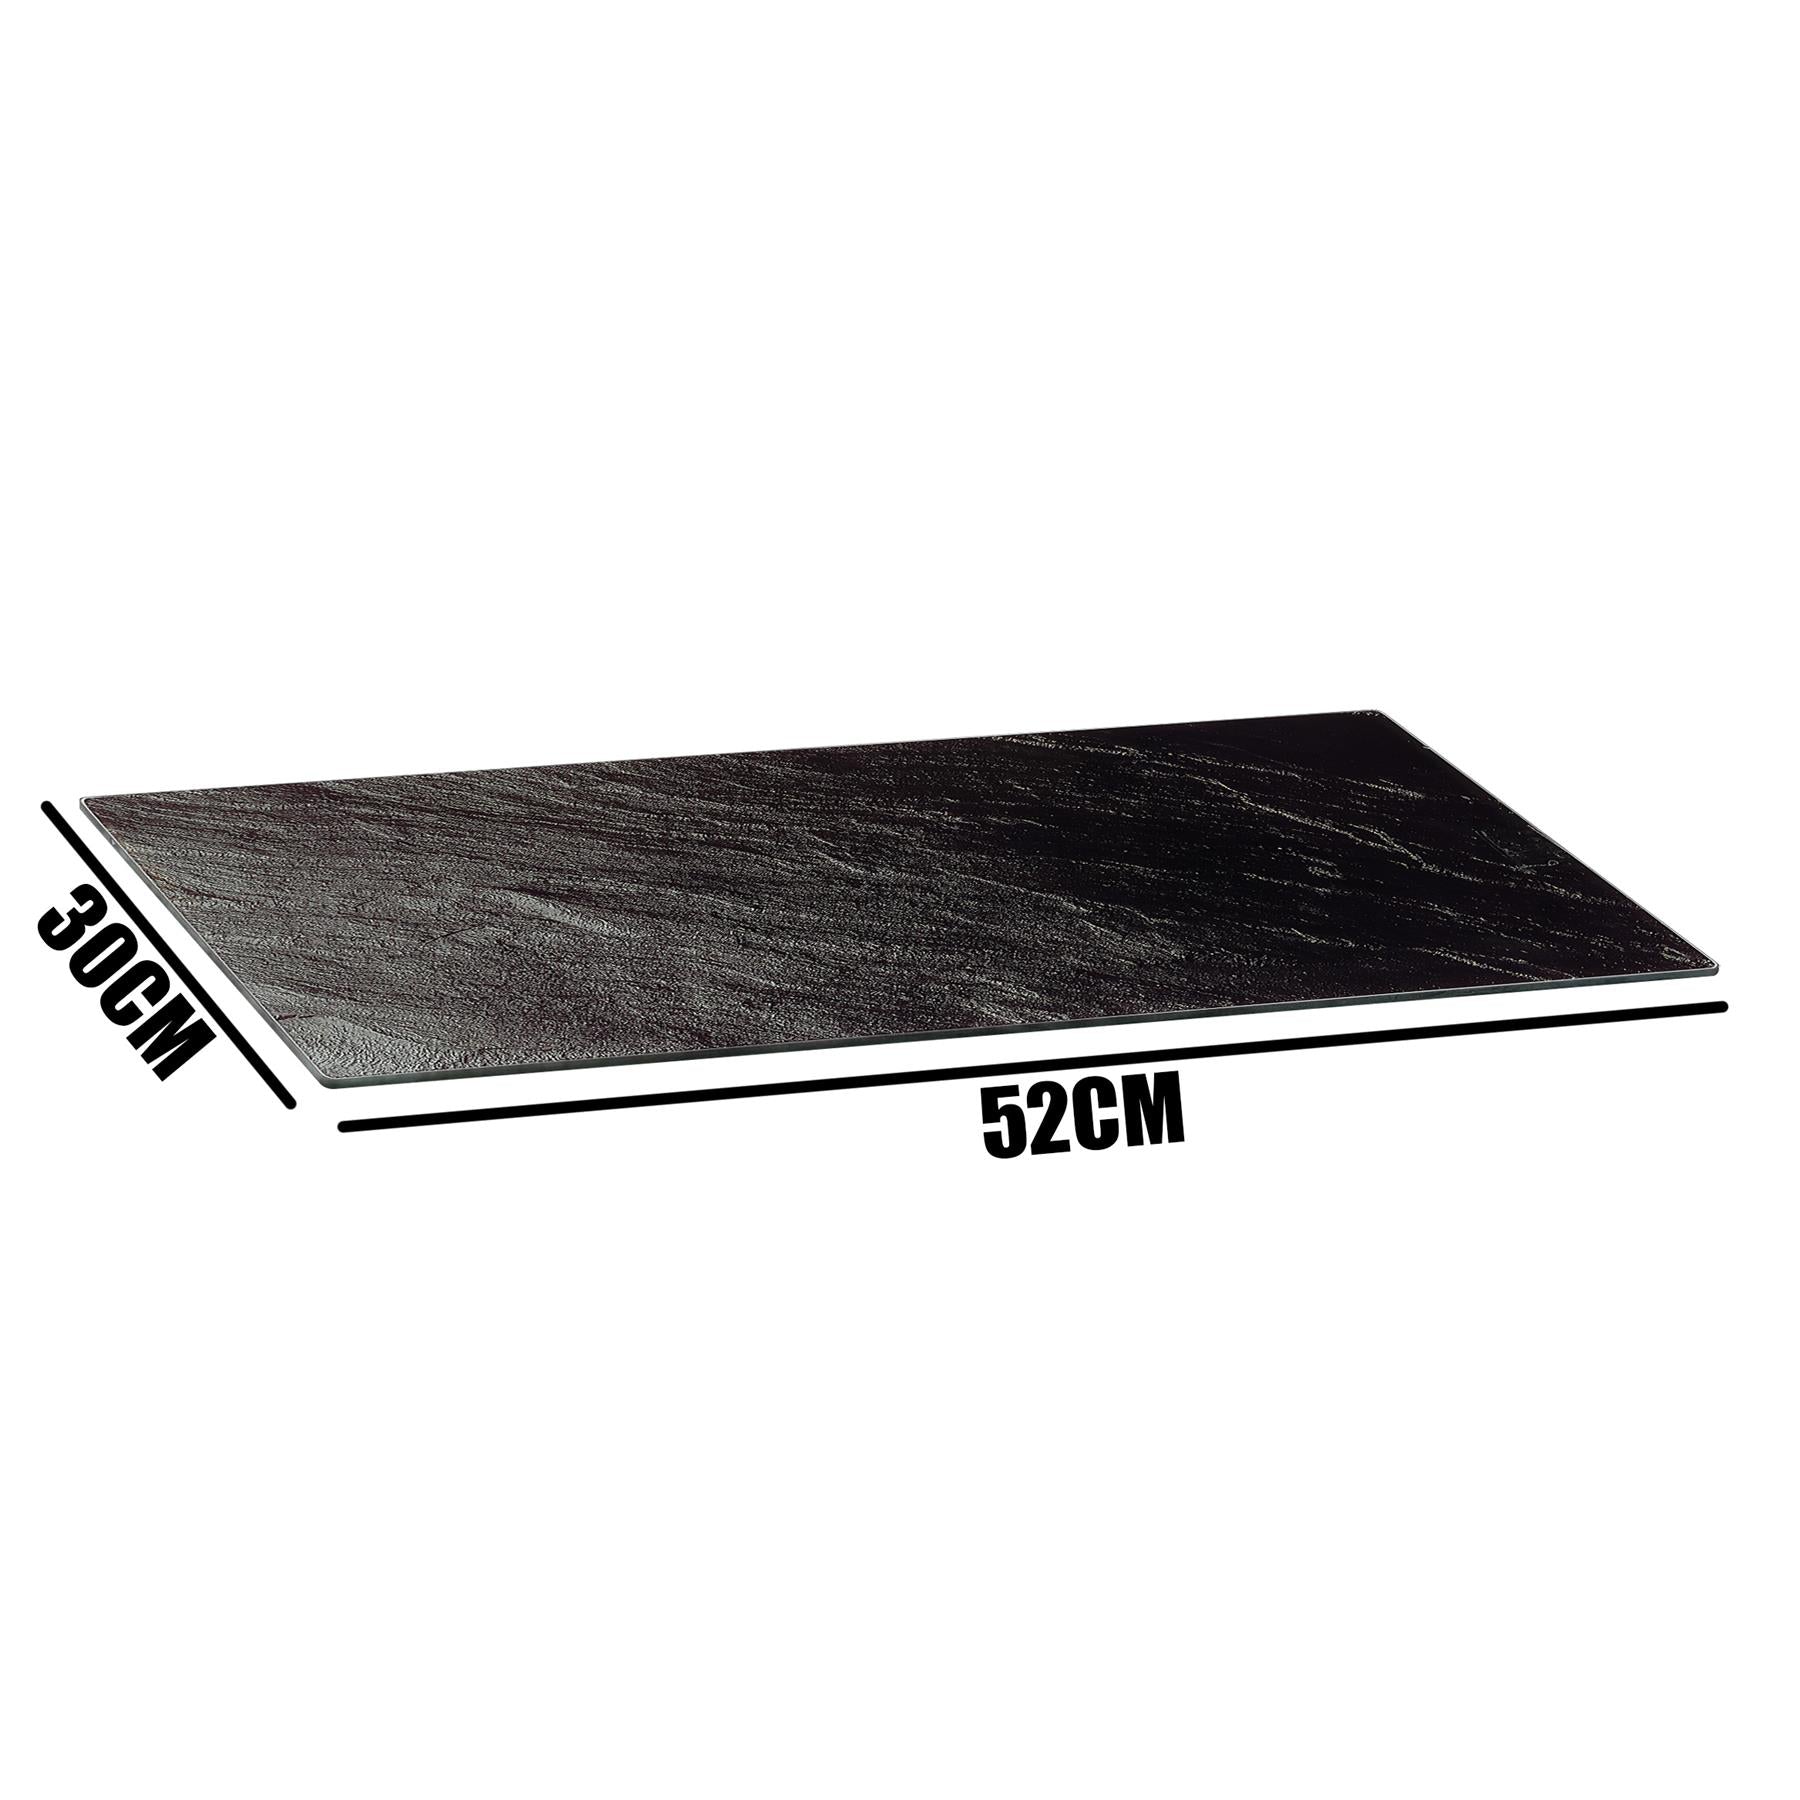 Stone Effect Glass Cutting Boards by Geezy - UKBuyZone